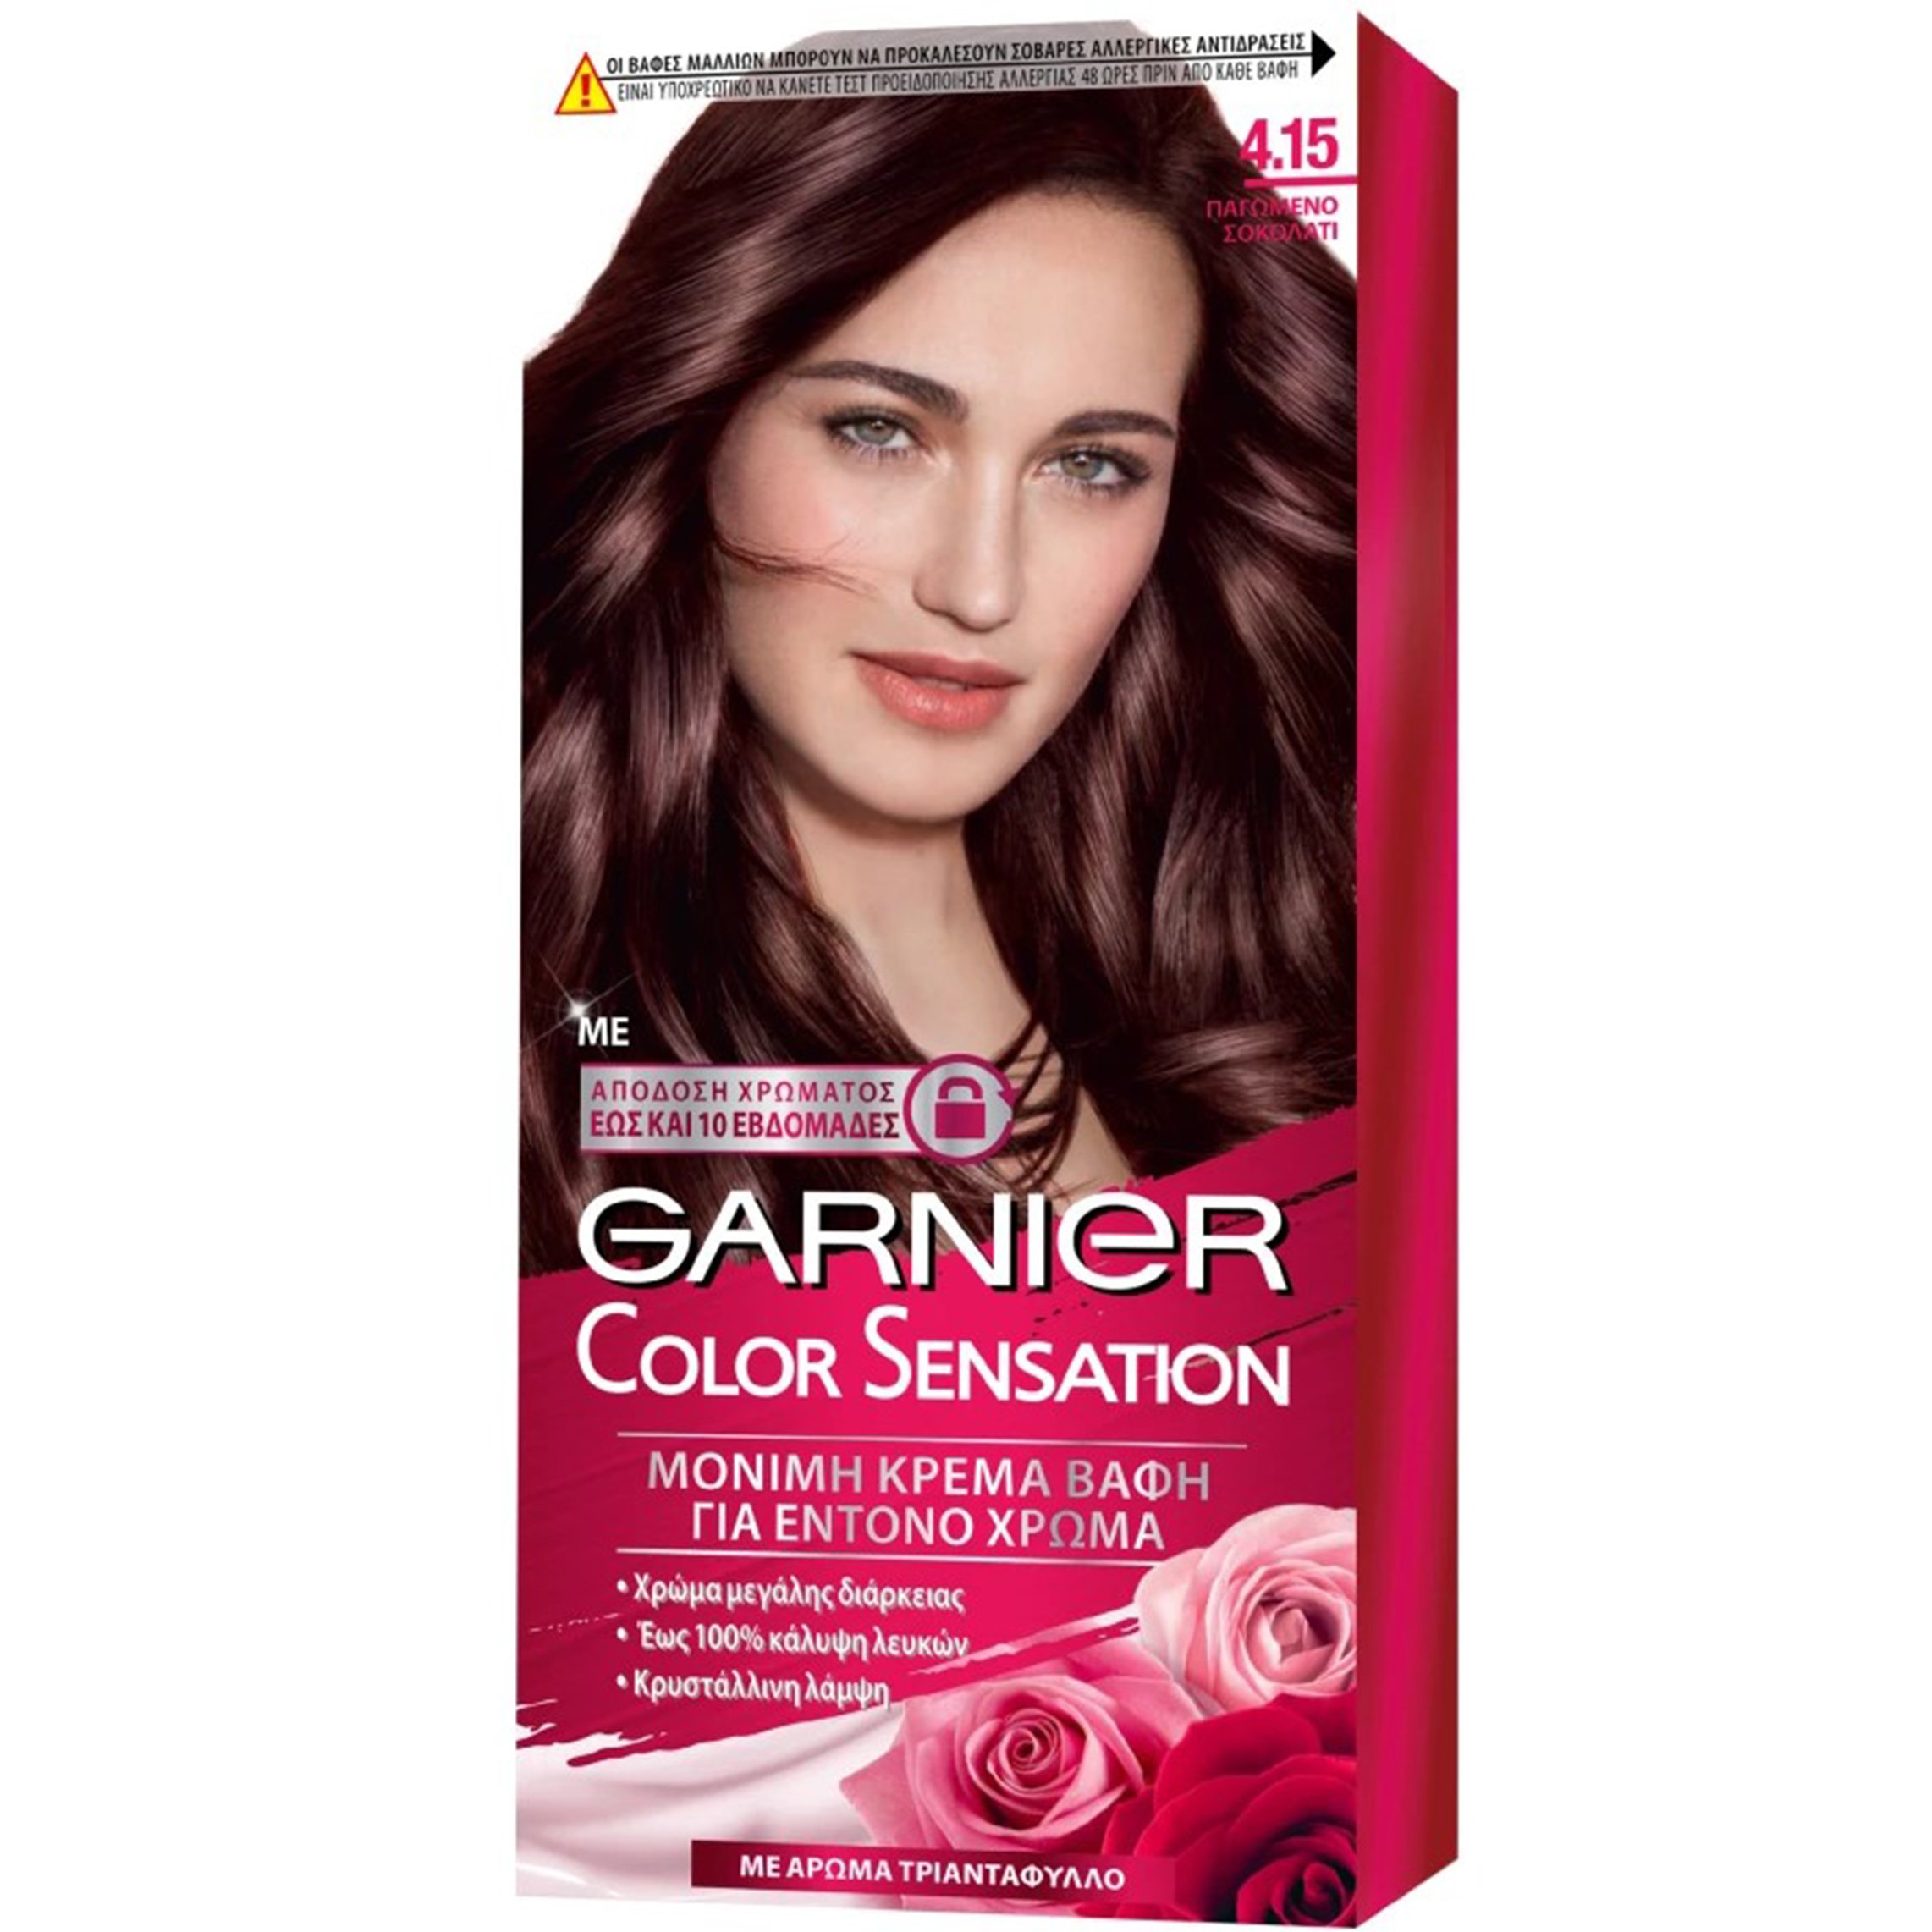 Garnier Color Sensation Permanent Hair Color Kit Μόνιμη Κρέμα Βαφή Μαλλιών με Άρωμα Τριαντάφυλλο 1 Τεμάχιο – 4.15 Παγωμένο Σοκολατί